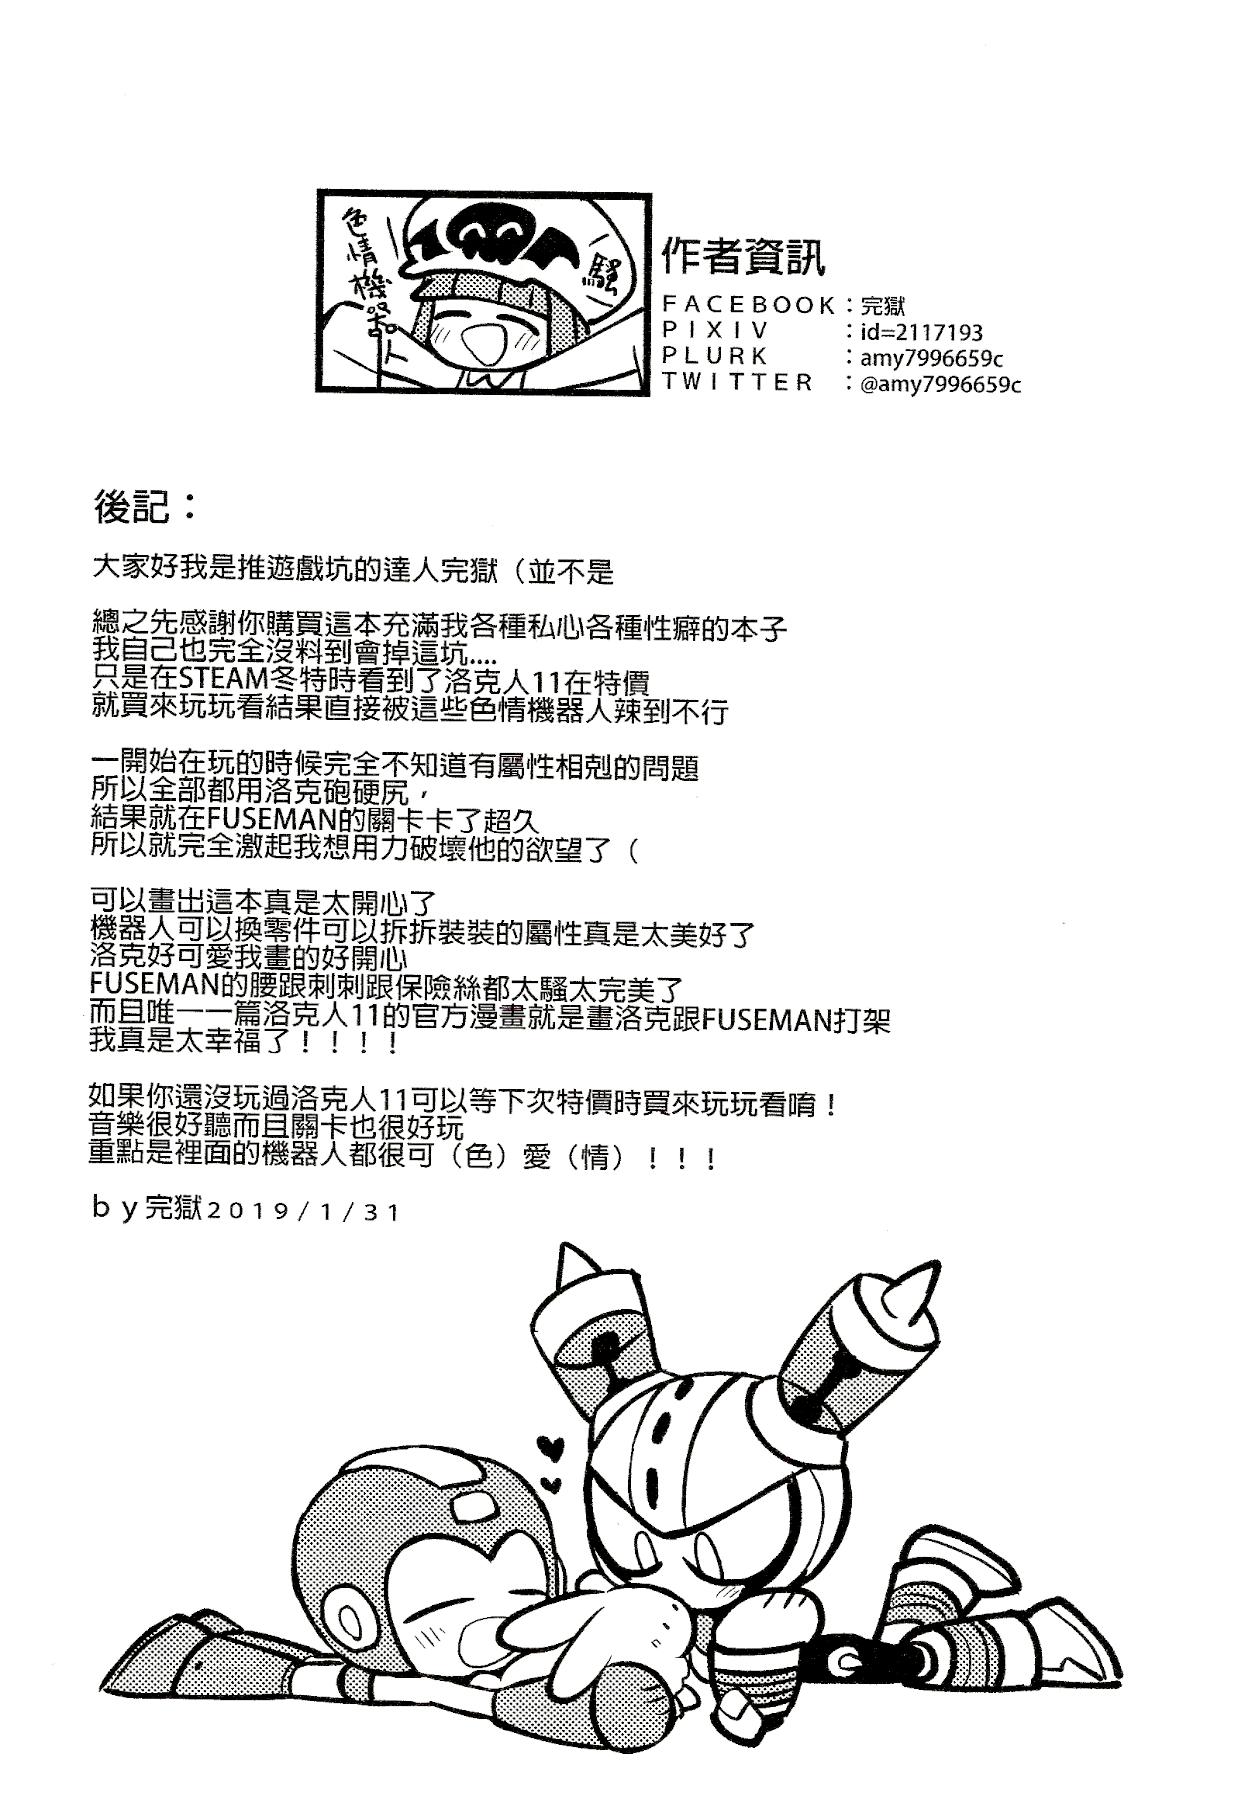 (Finish Prison) Luòkè rén 11-FUSEMAN gōnglüè běn | "Rockman 11-FUSEMAN Raiders" (Mega Man) 32